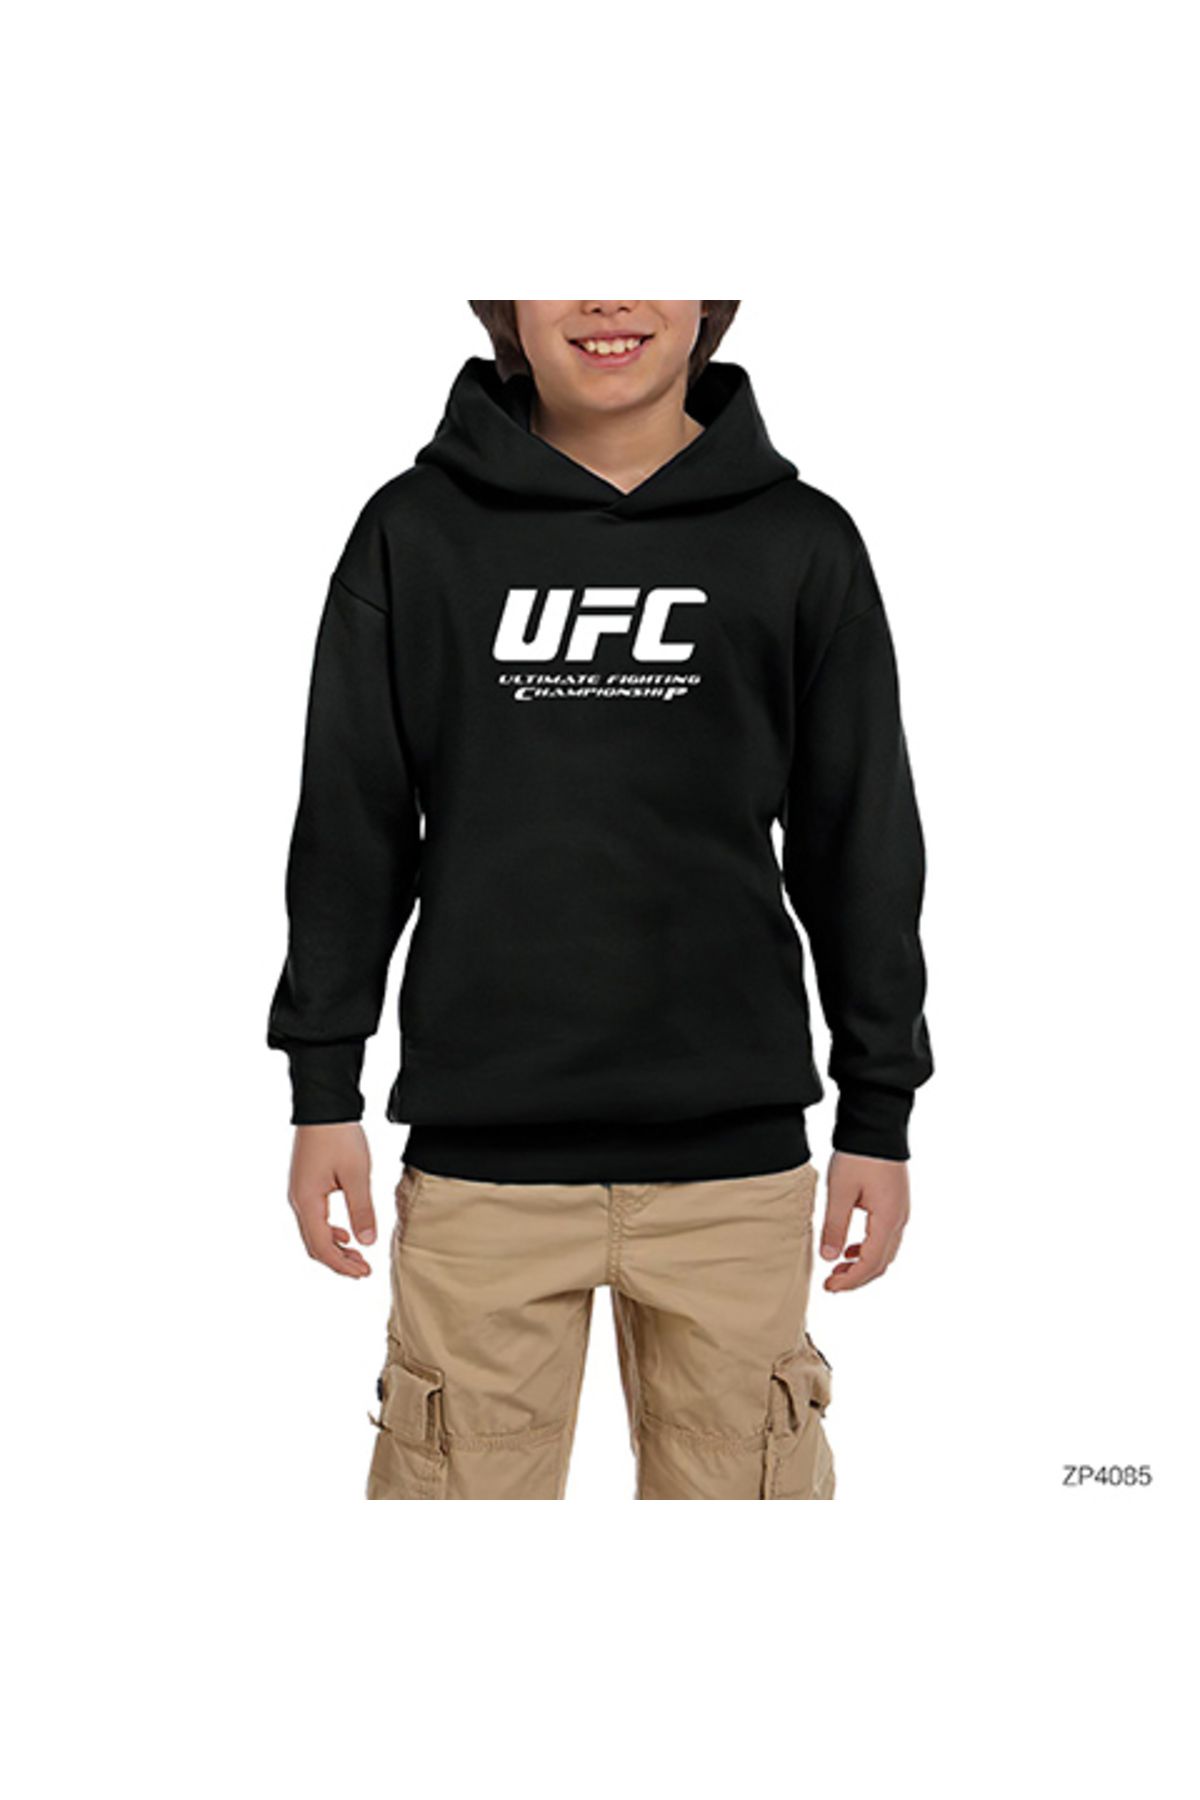 Anonim Moda UFC Ultimate Championship Siyah Çocuk Kapşonlu Sweatshirt